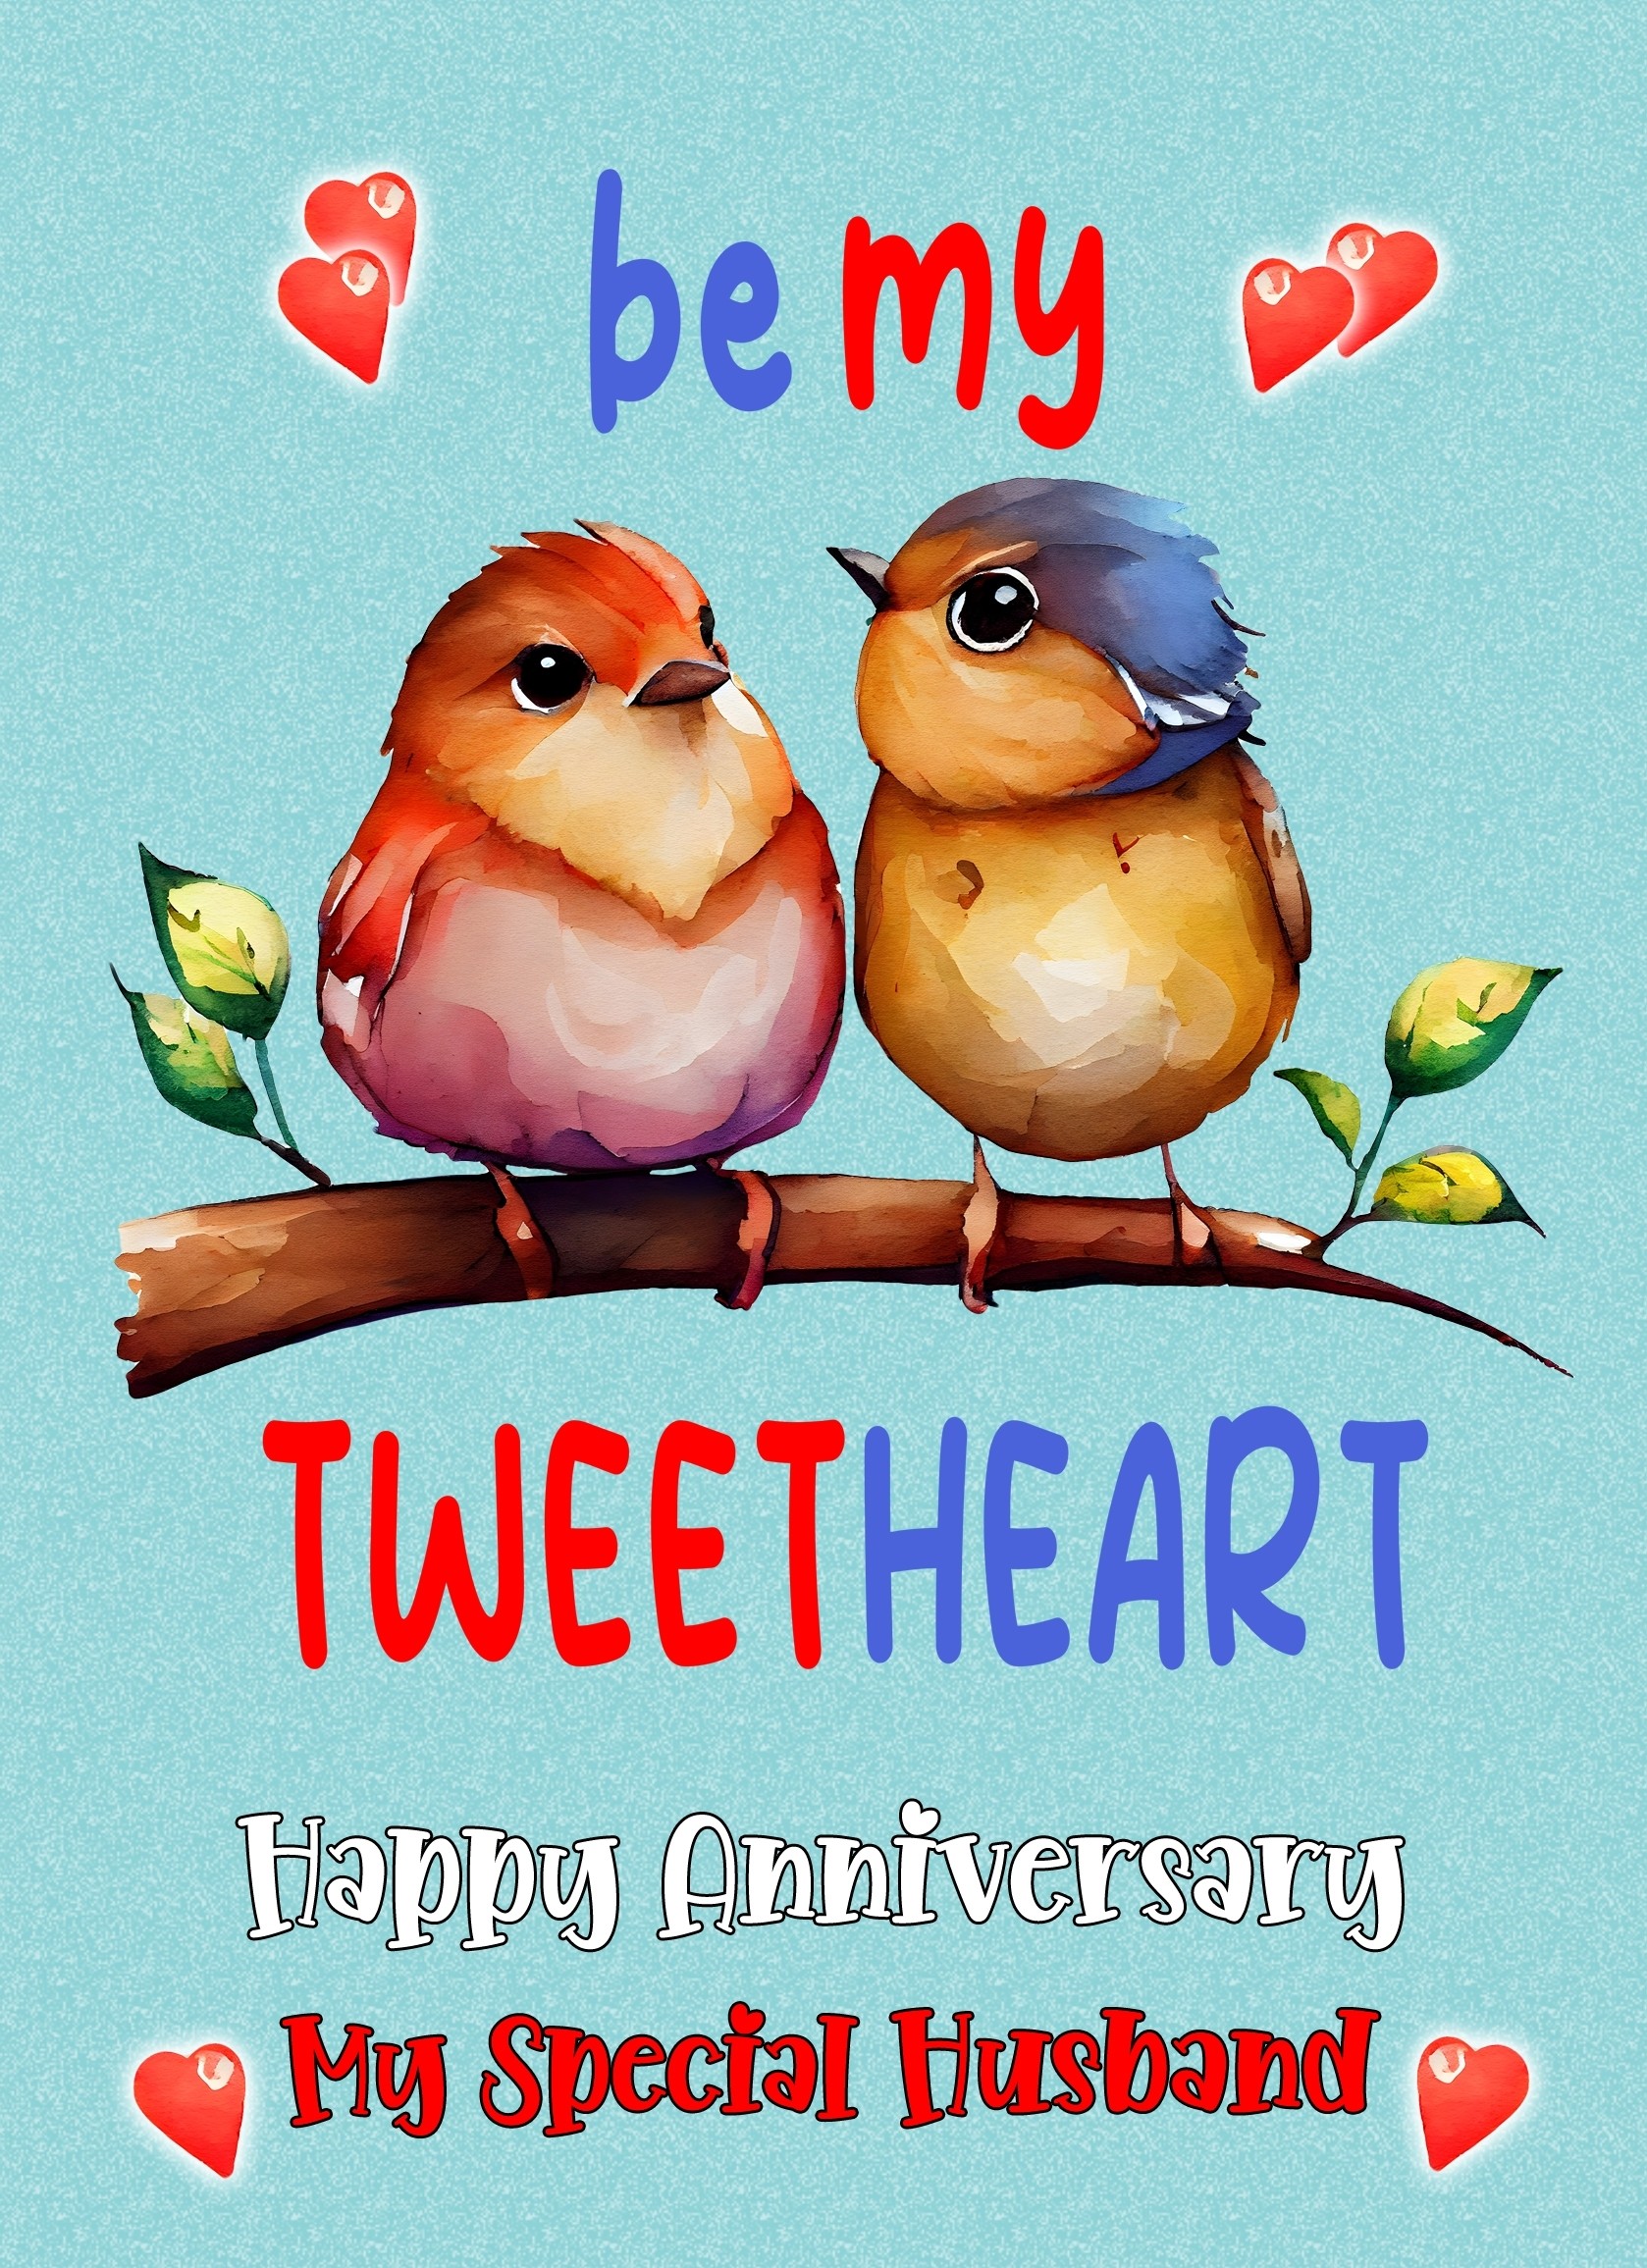 Funny Pun Romantic Anniversary Card for Husband (Tweetheart)